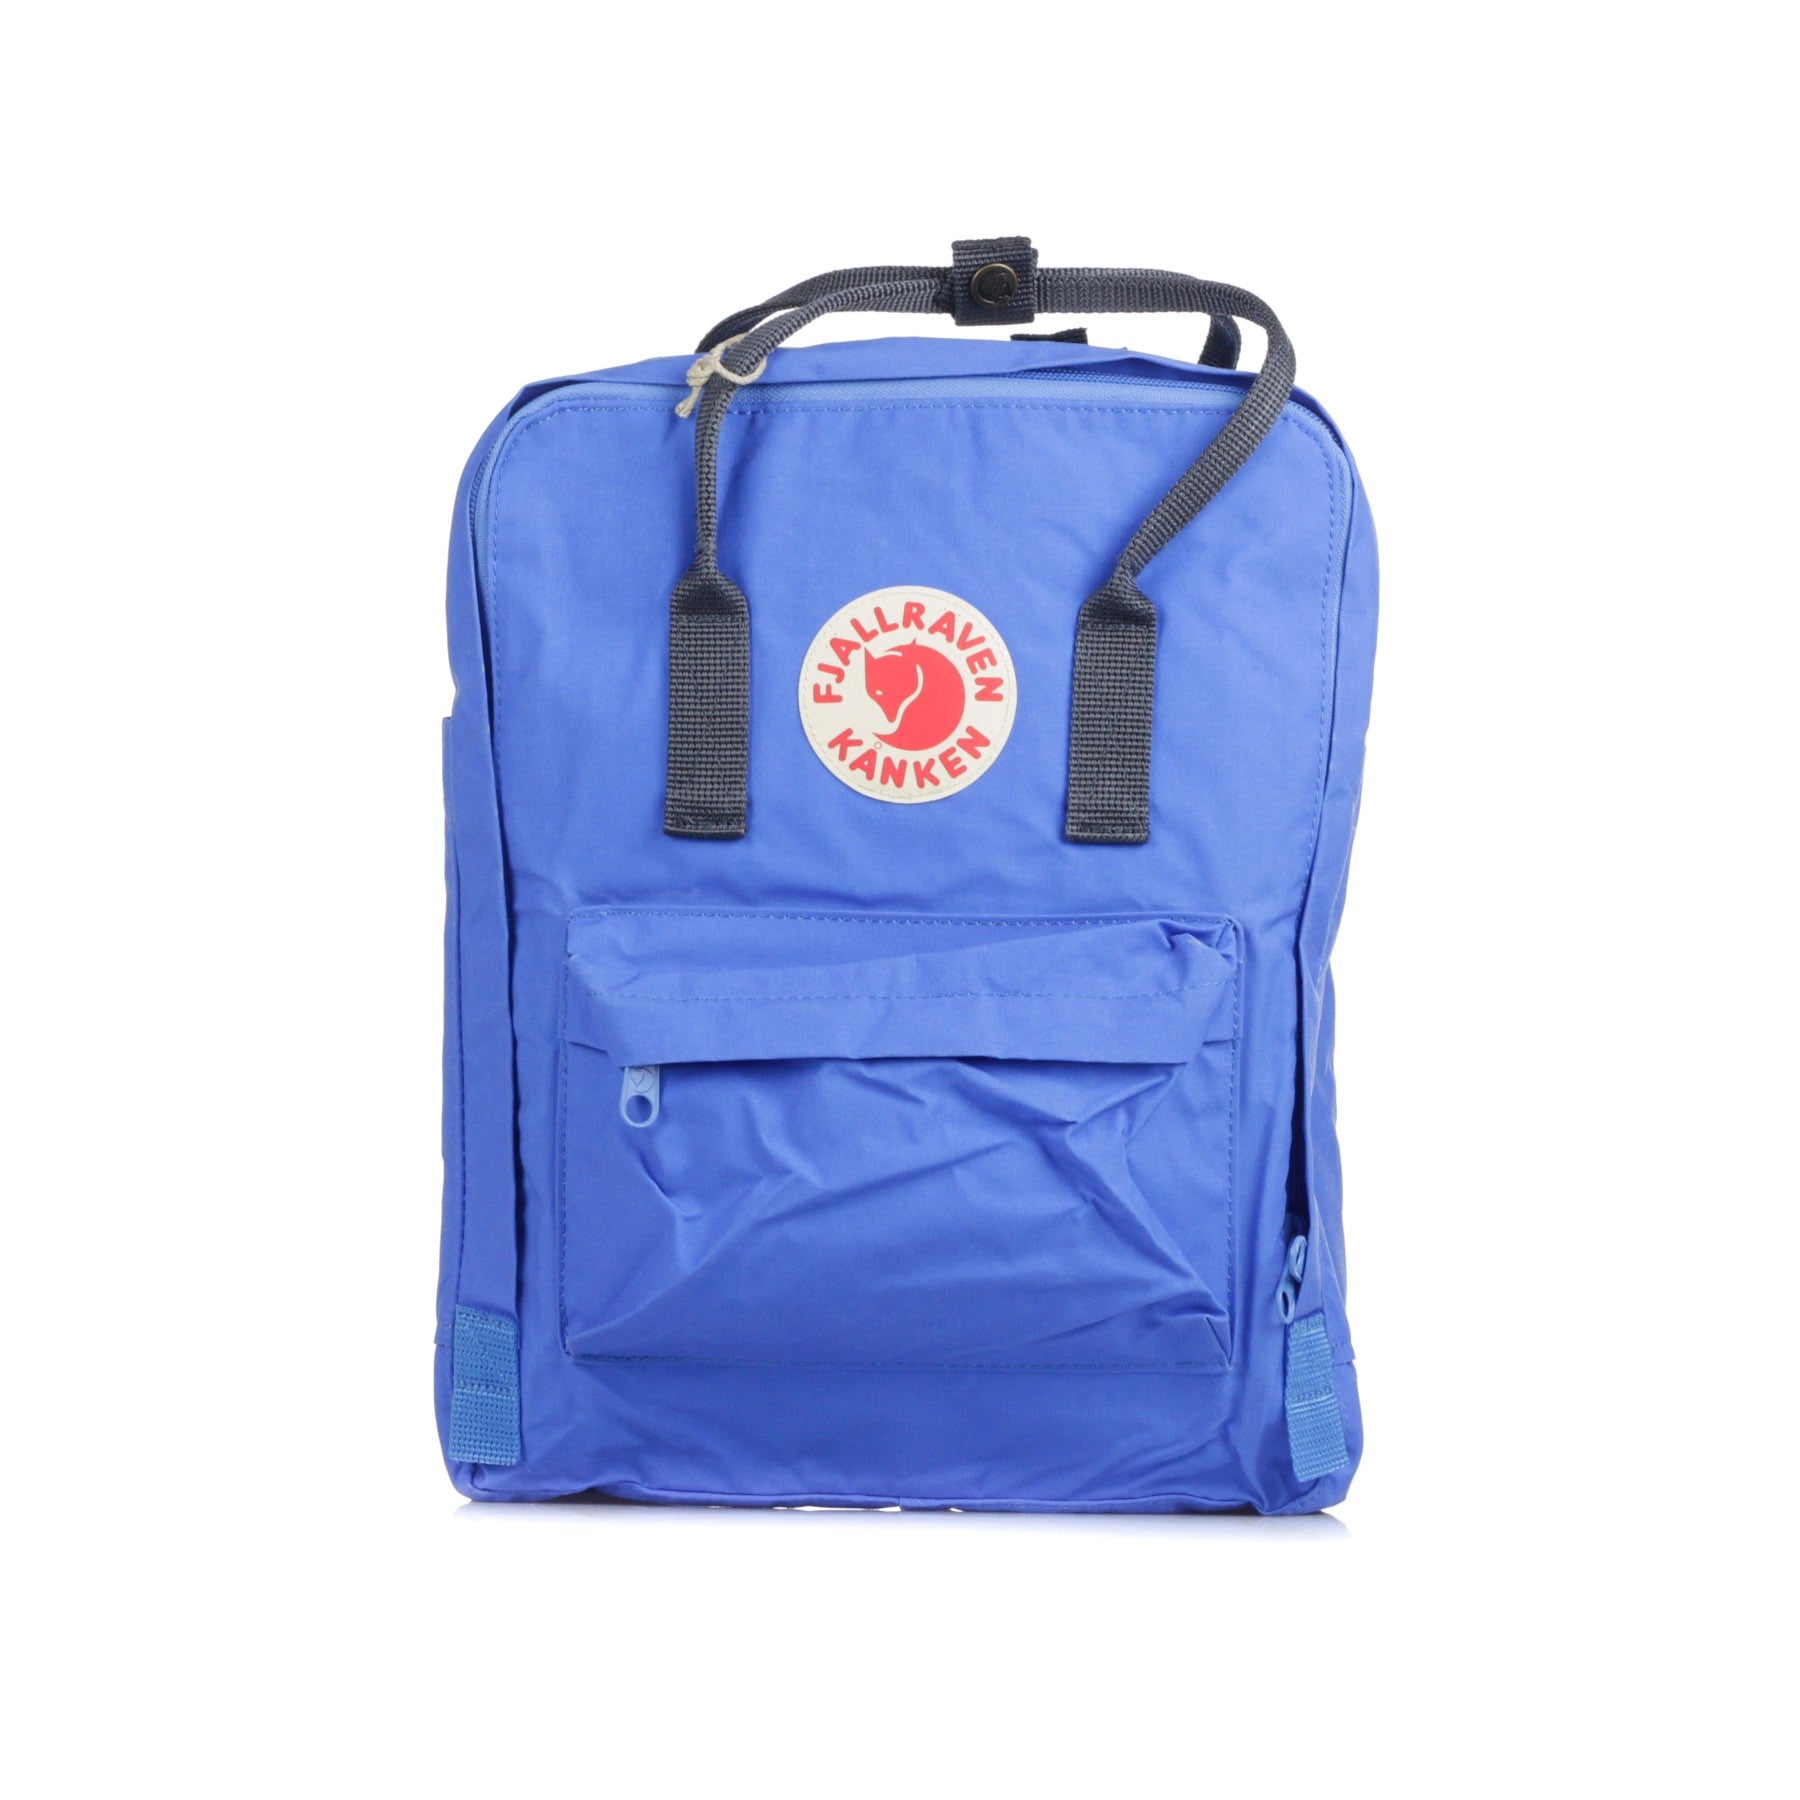 Unisex Kanken Blue/navy backpack